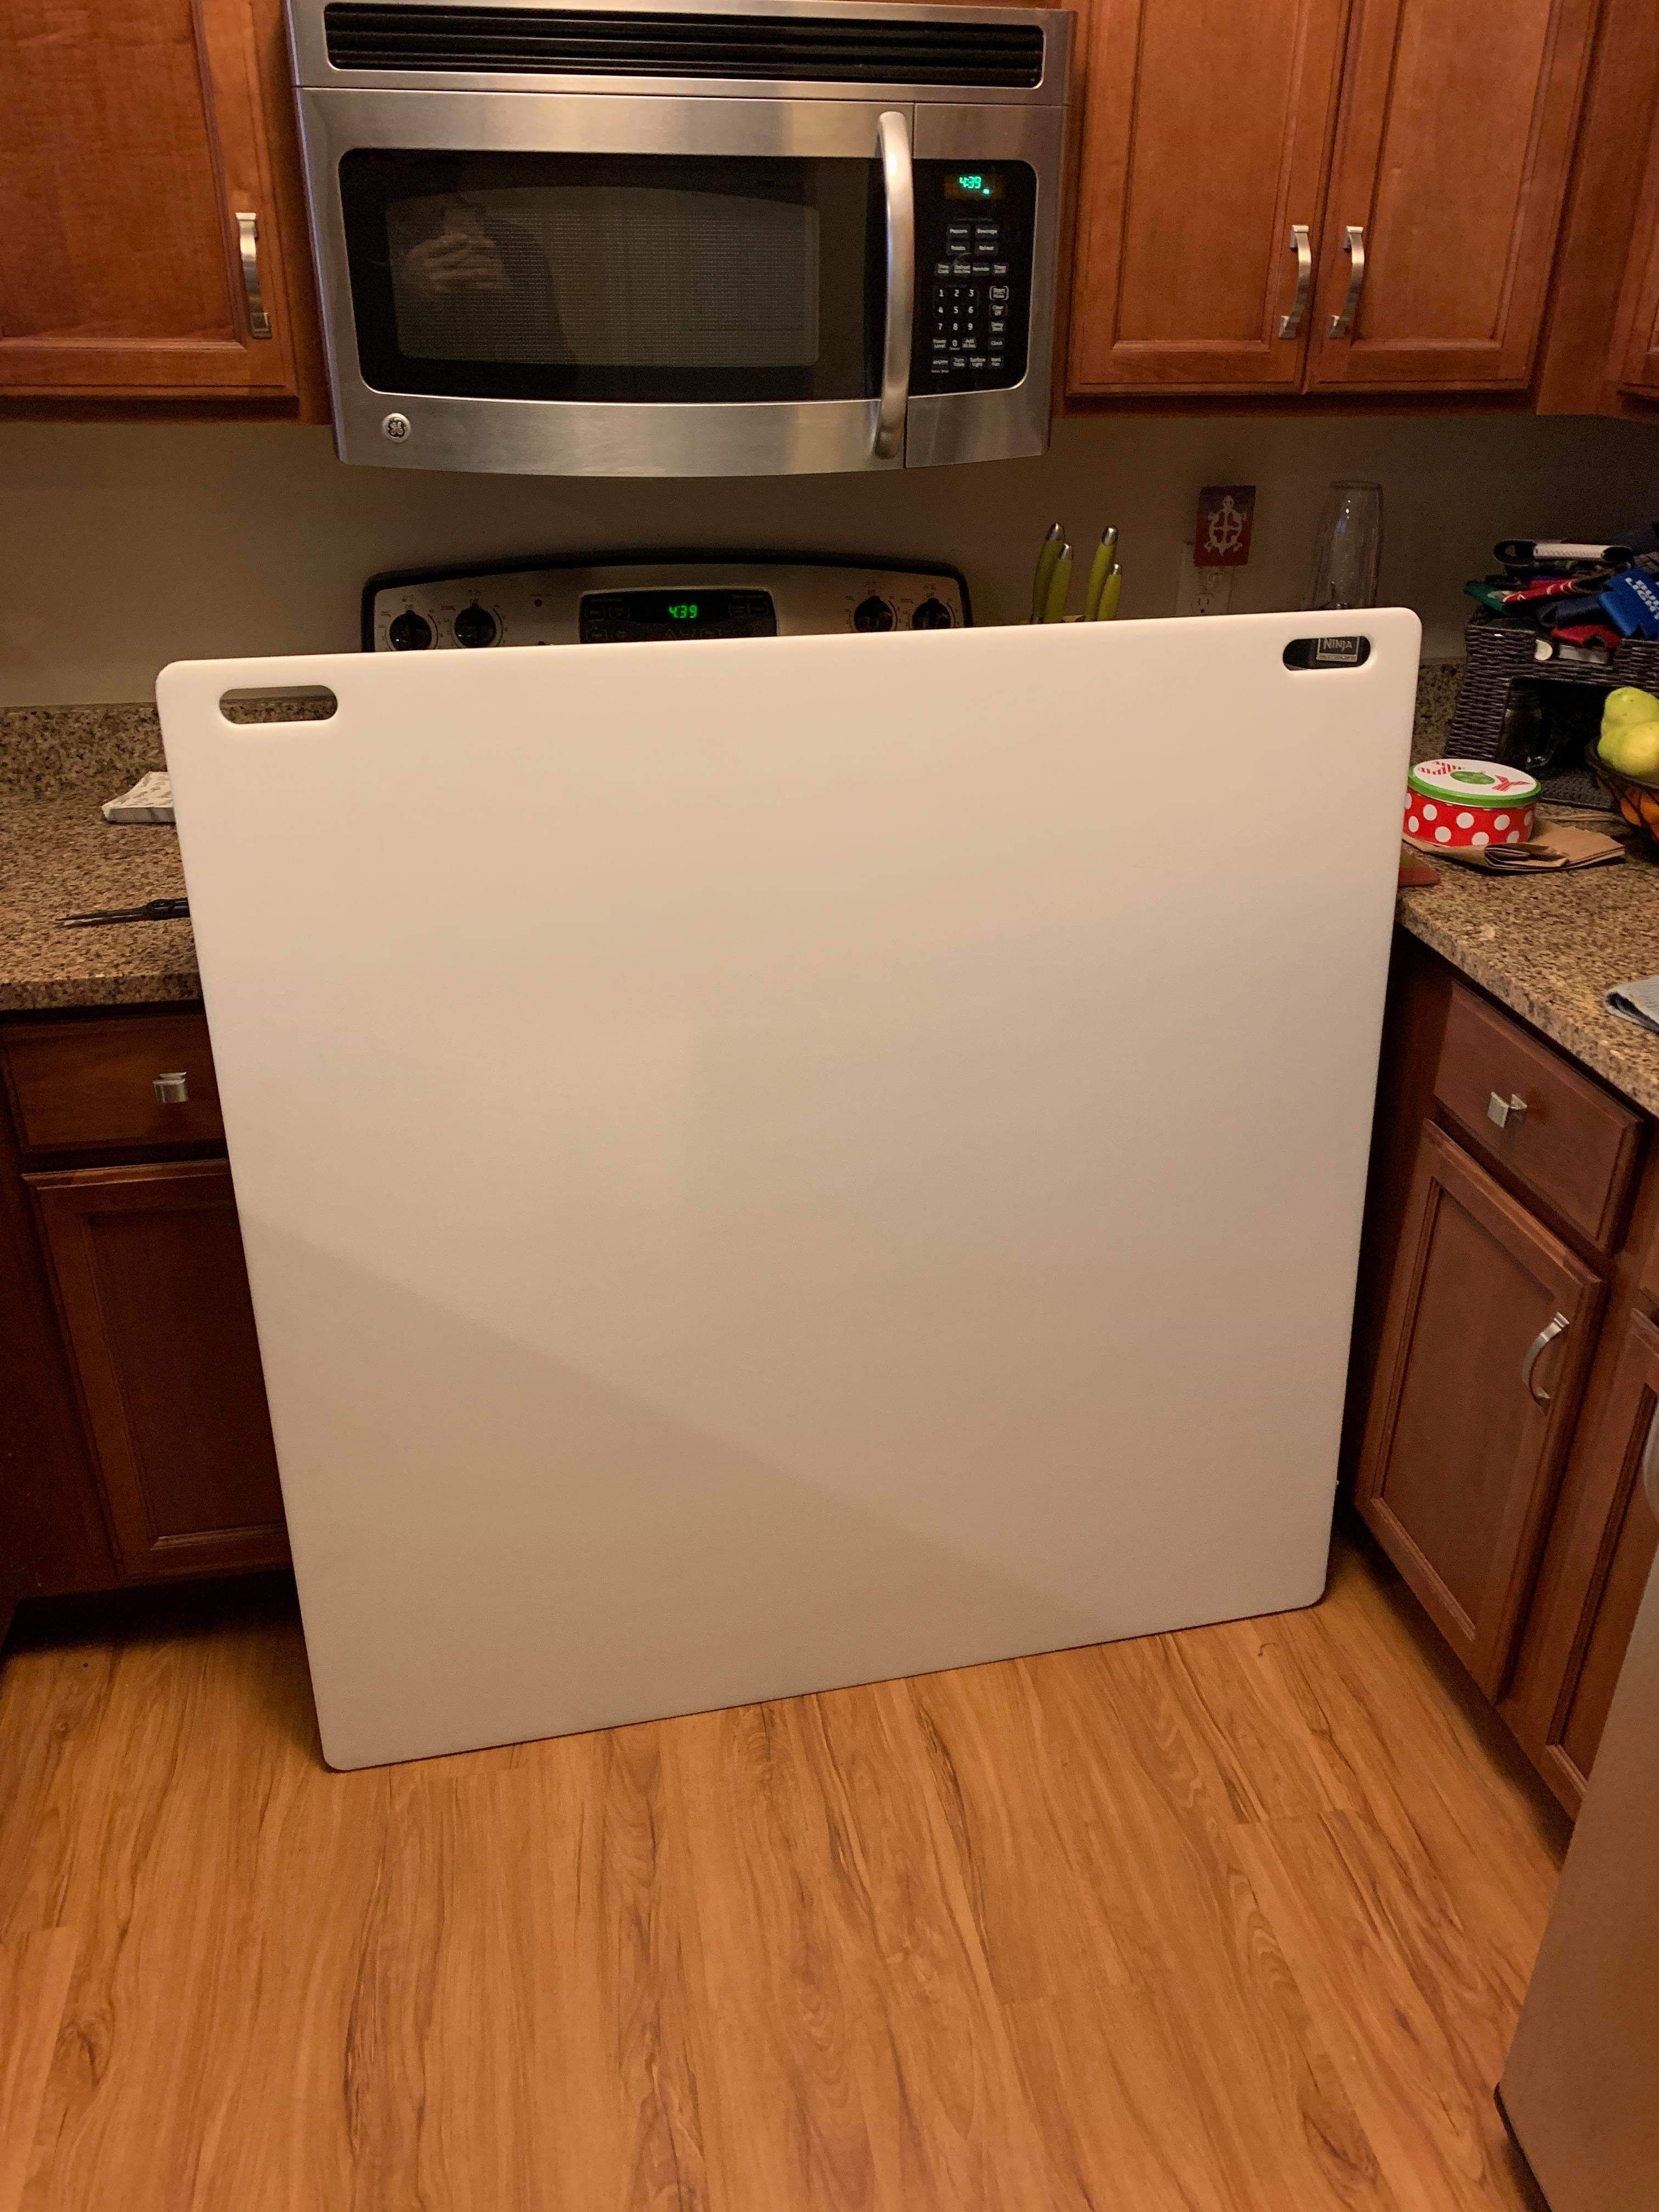 My friend's GF's dad sent them an xxxxl cutting board for their housewarming by mistake.